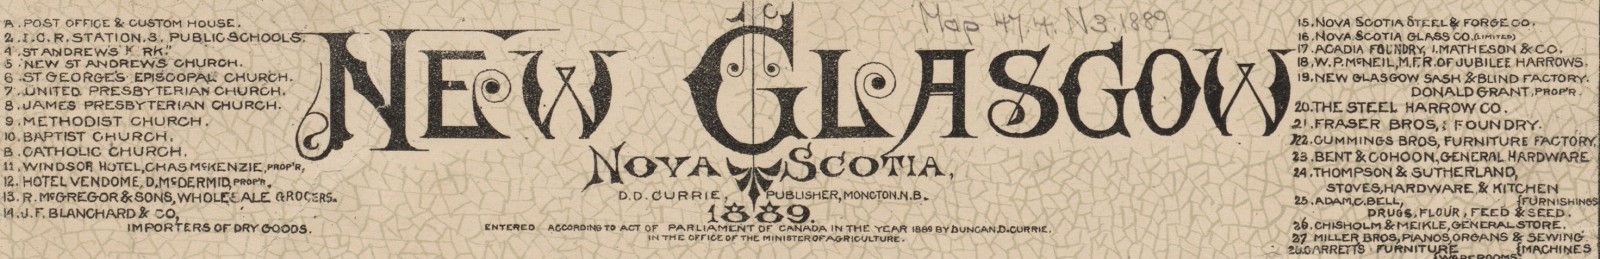 1889 Map New Glasgow Nova Scotia - title block